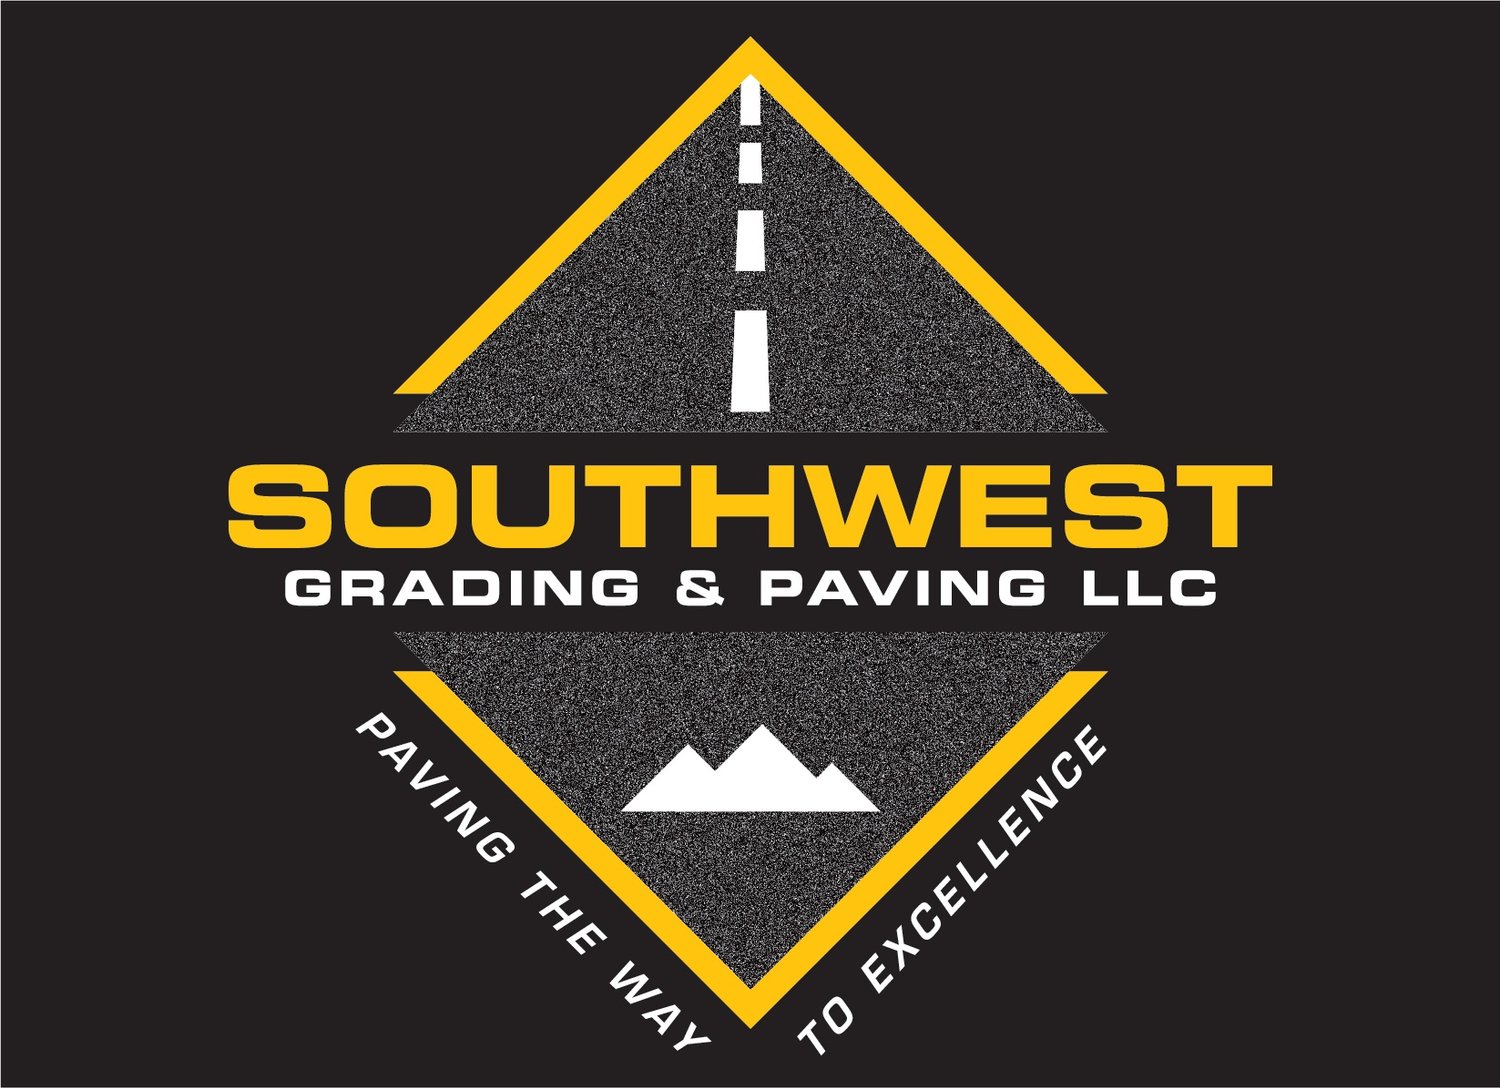 Southwest Grading and Paving LLC.